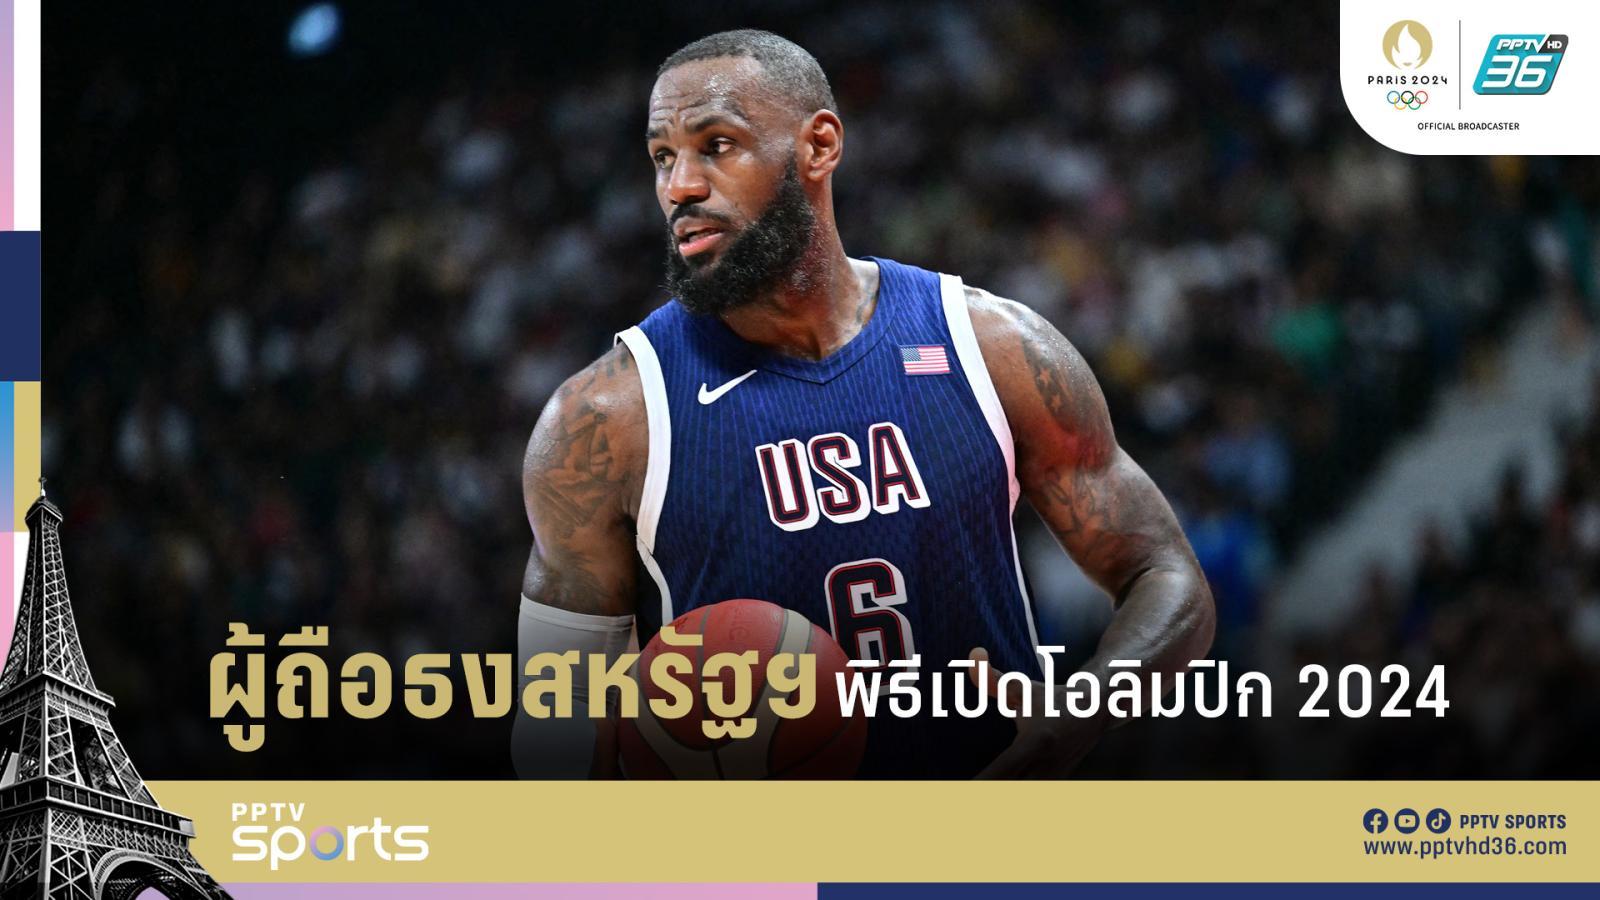 NBA球星勒布朗·詹姆斯被选为美国奥运旗手：PPTVHD36